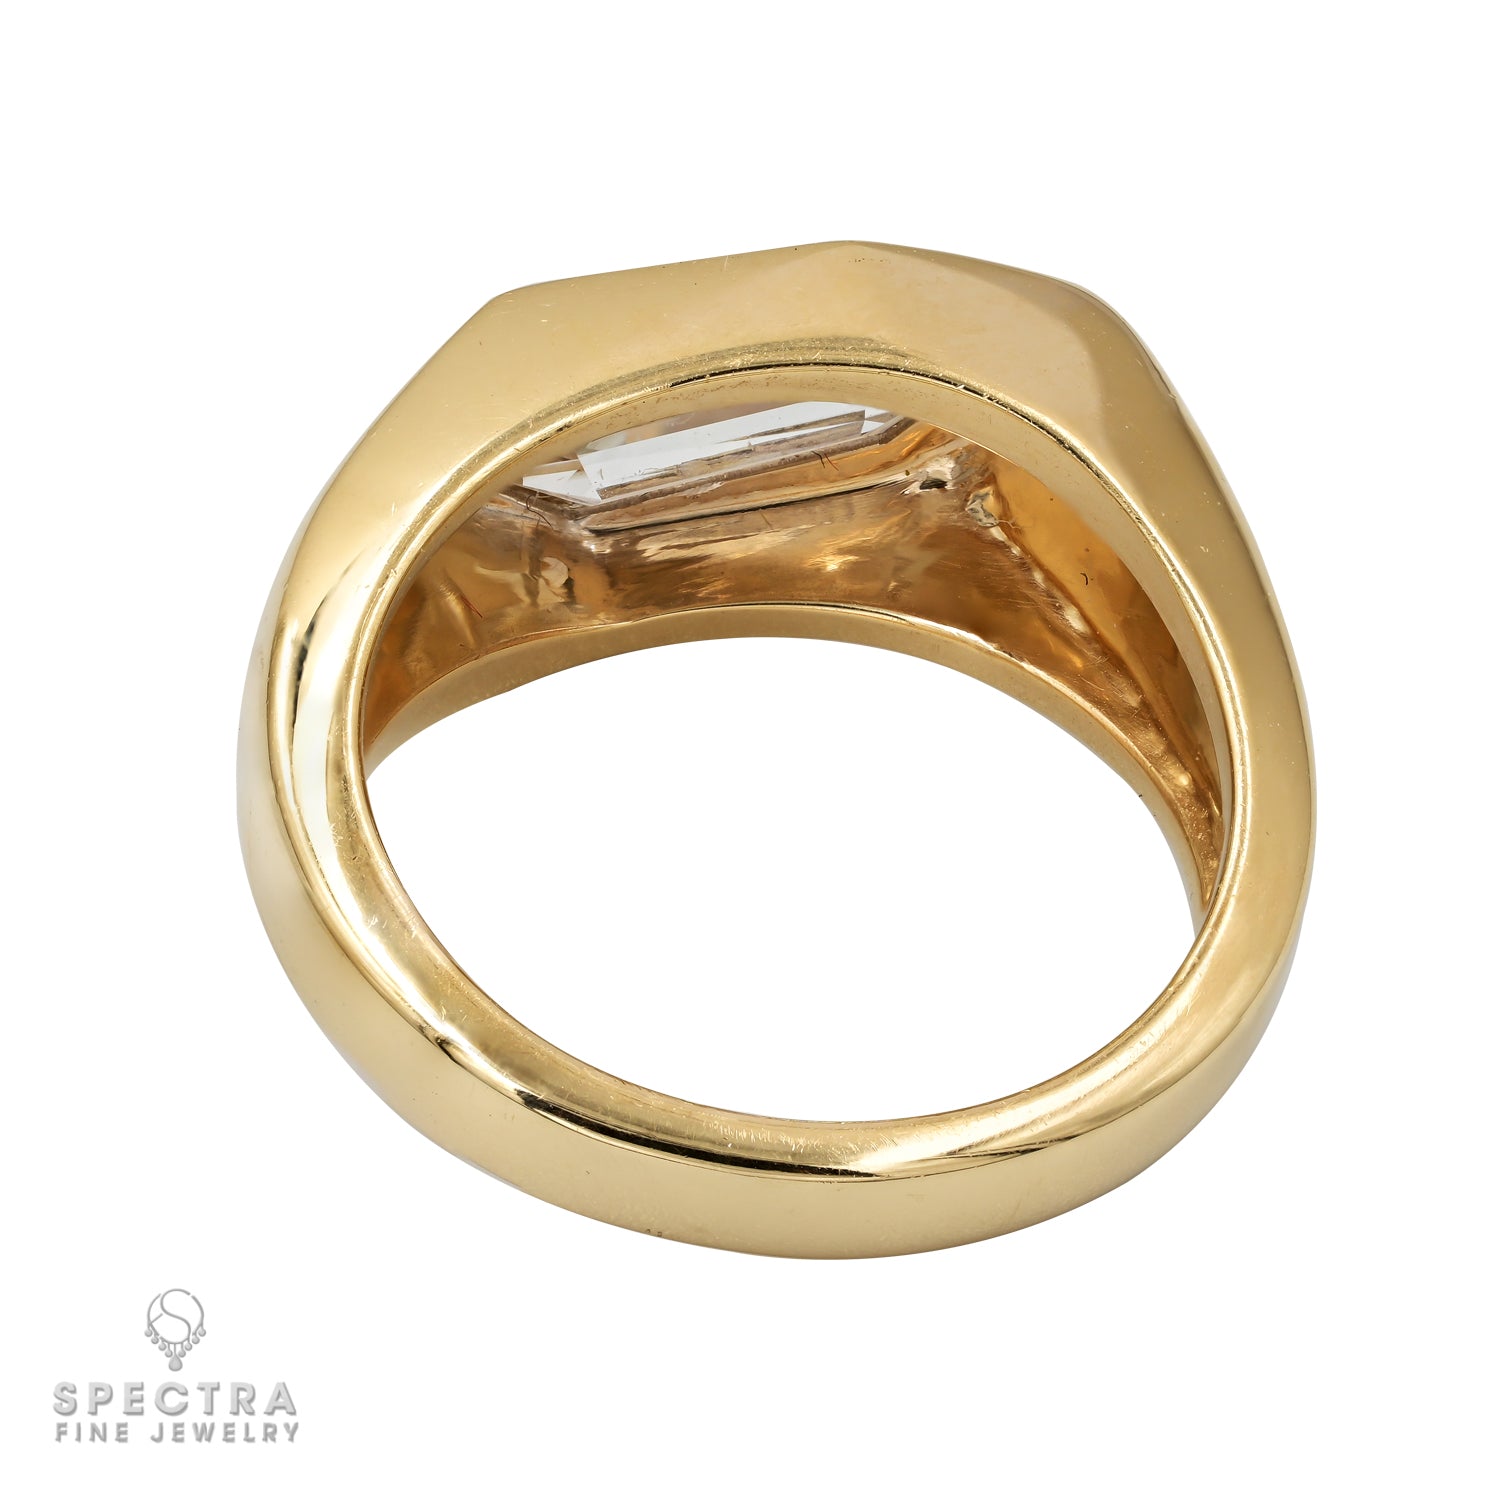 Spectra Fine Jewelry 1.50ct Kite Shape Diamond Ring